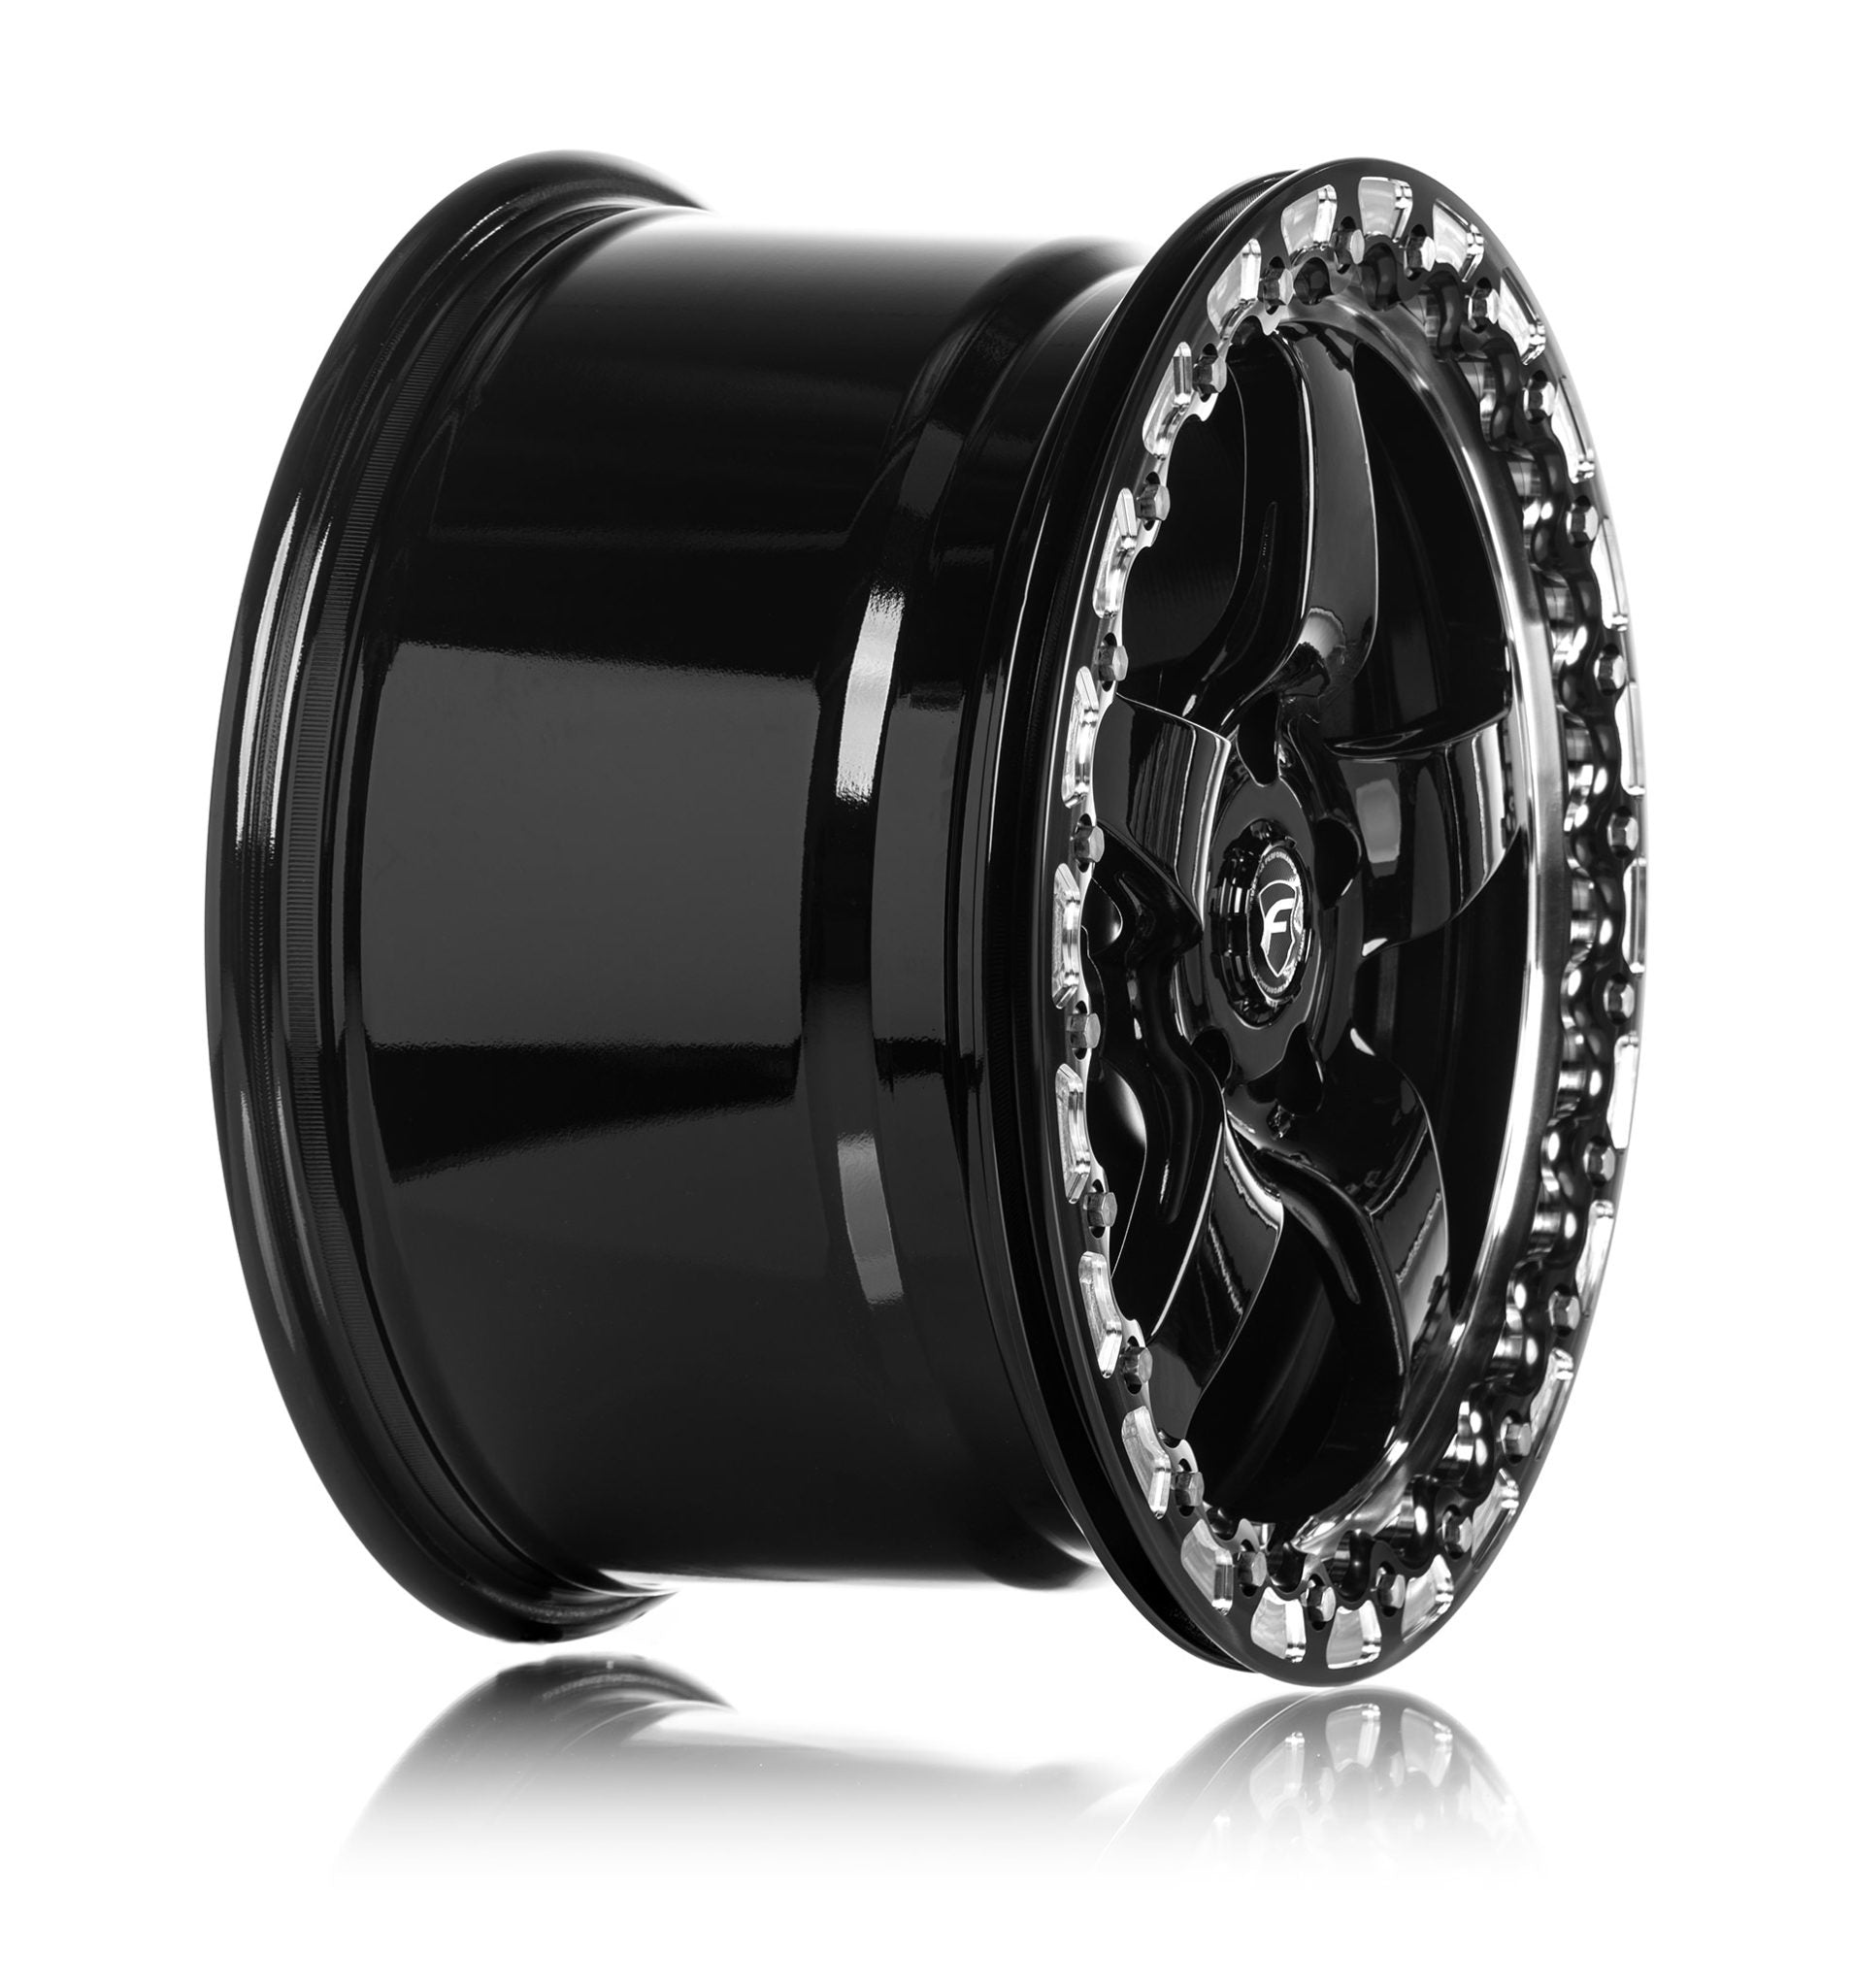 Forgestar D5 BEADLOCK Drag Racing Wheels - Gloss Black w/Machined Lip - 17X10 - Sold Individually - Motorsports LA